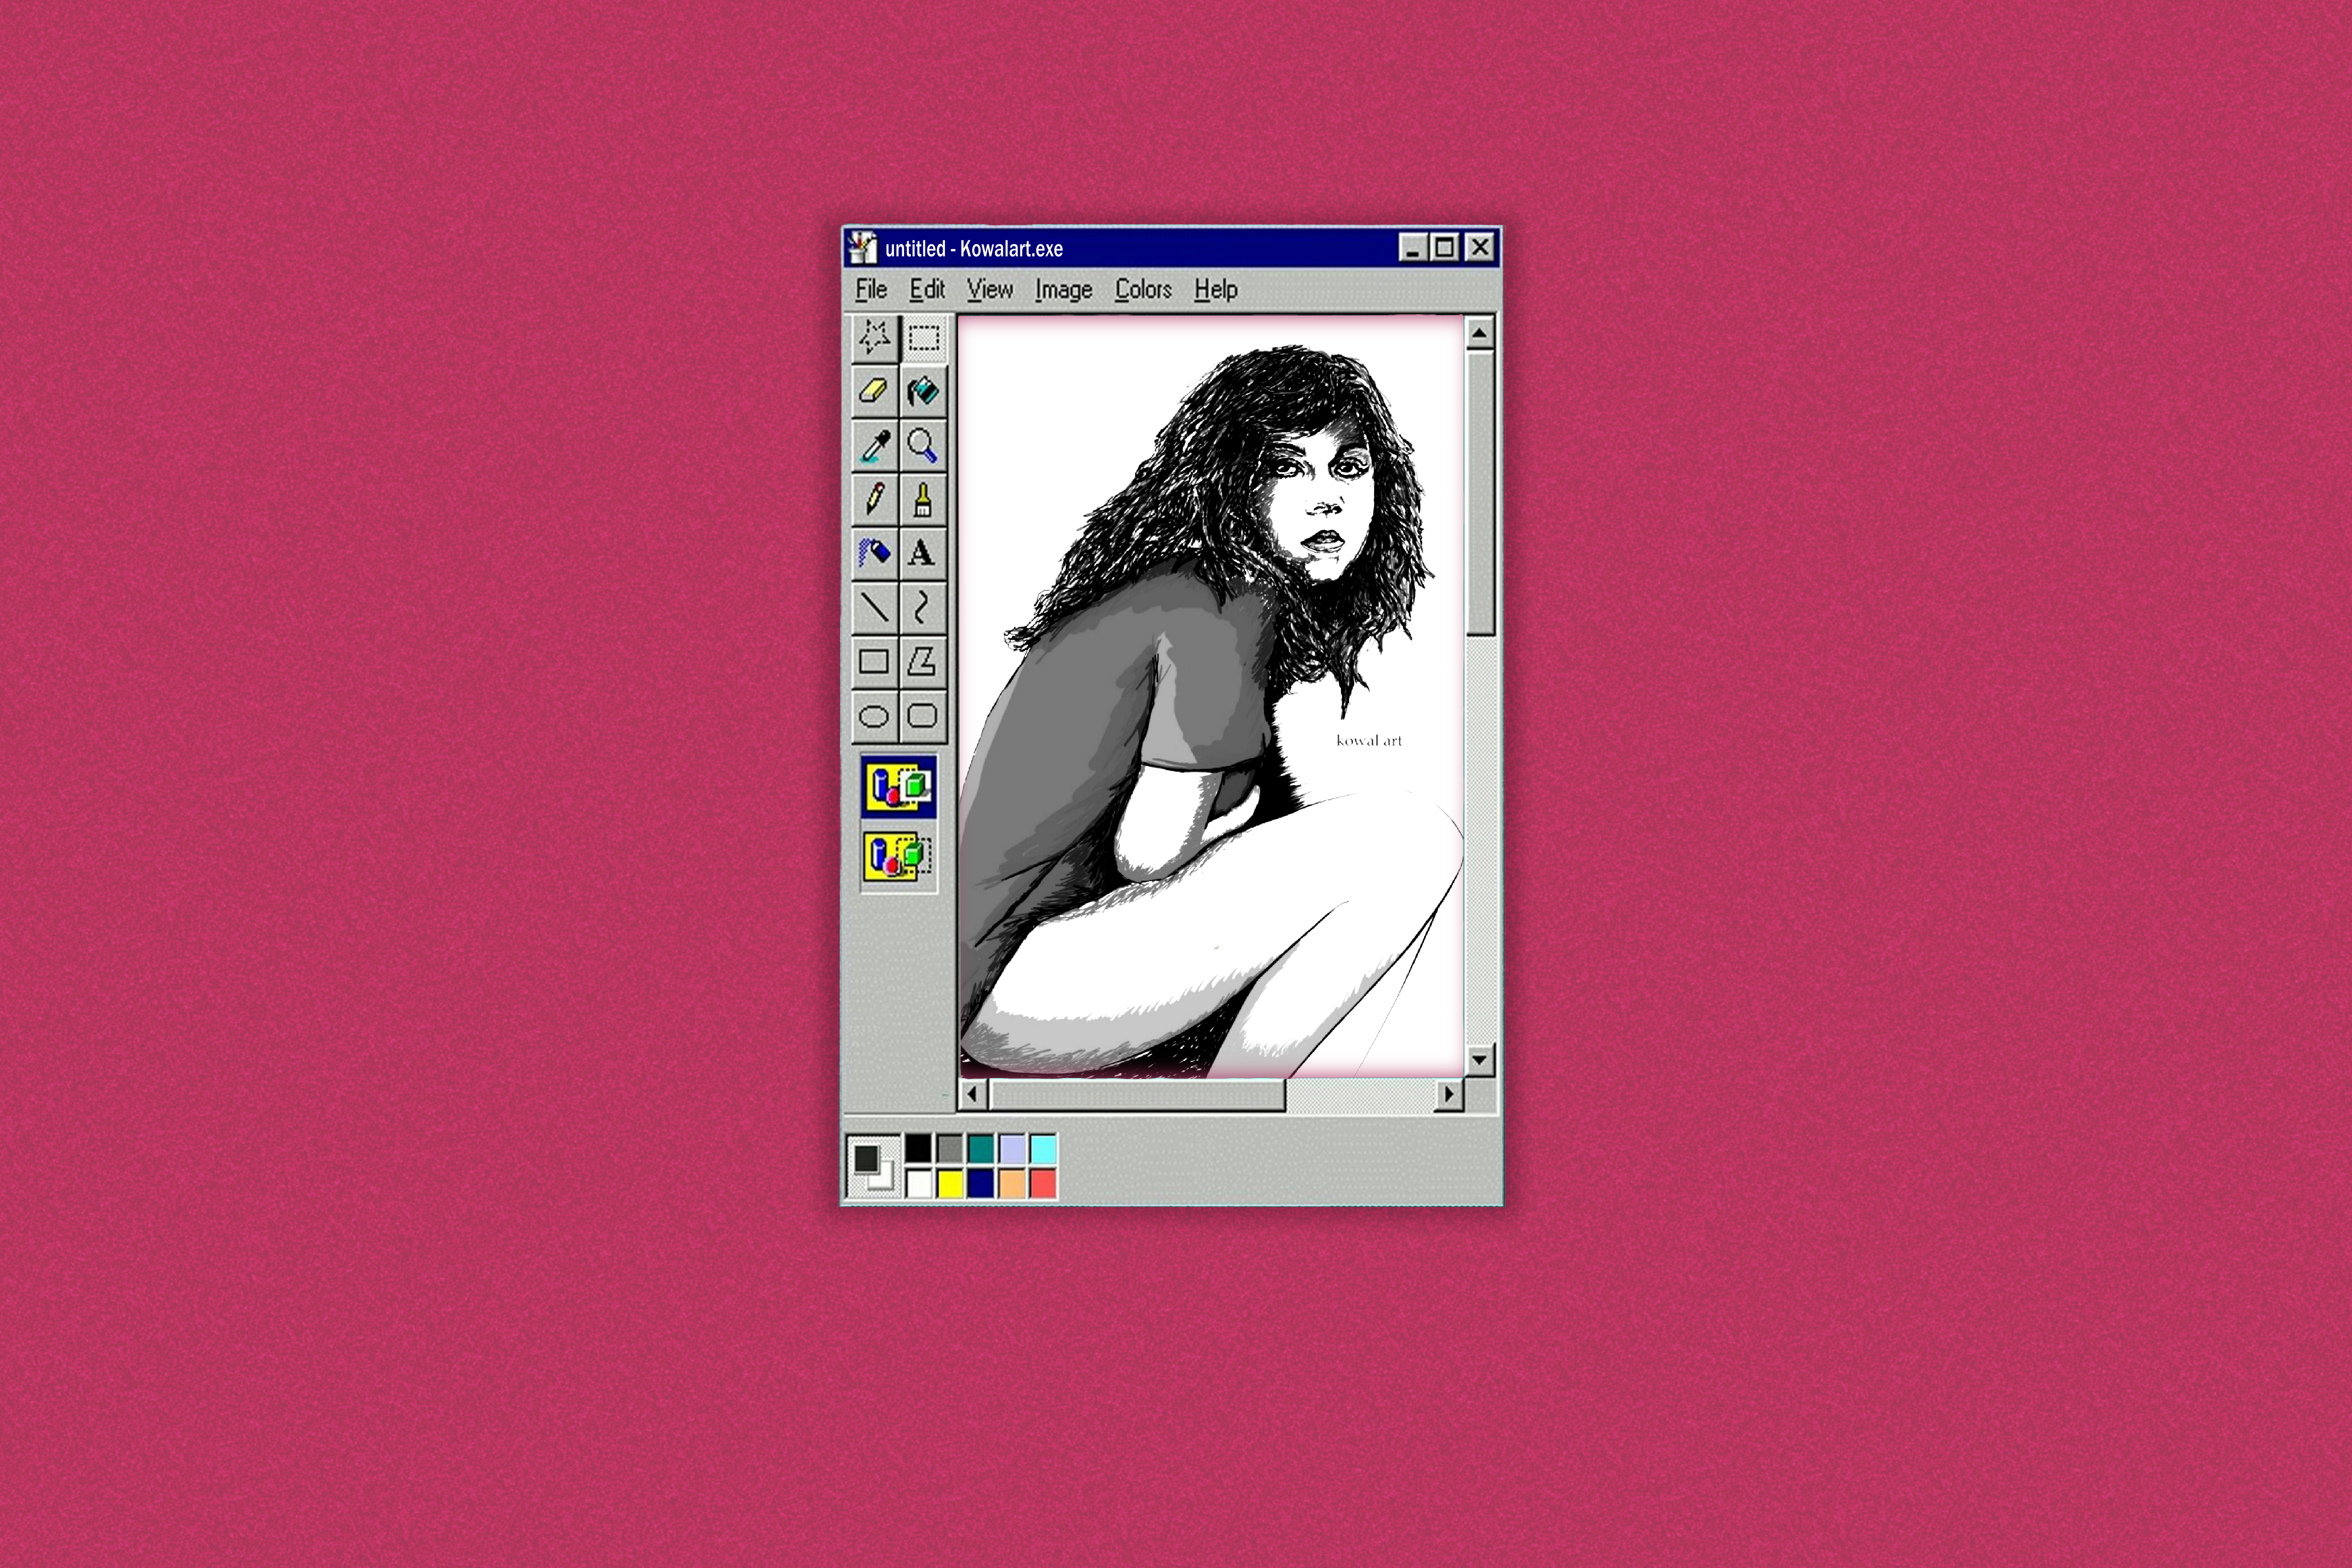 General 5120x3413 Windows 95 retro games legs KowalArt Jennette McCurdy pink background minimalism simple background